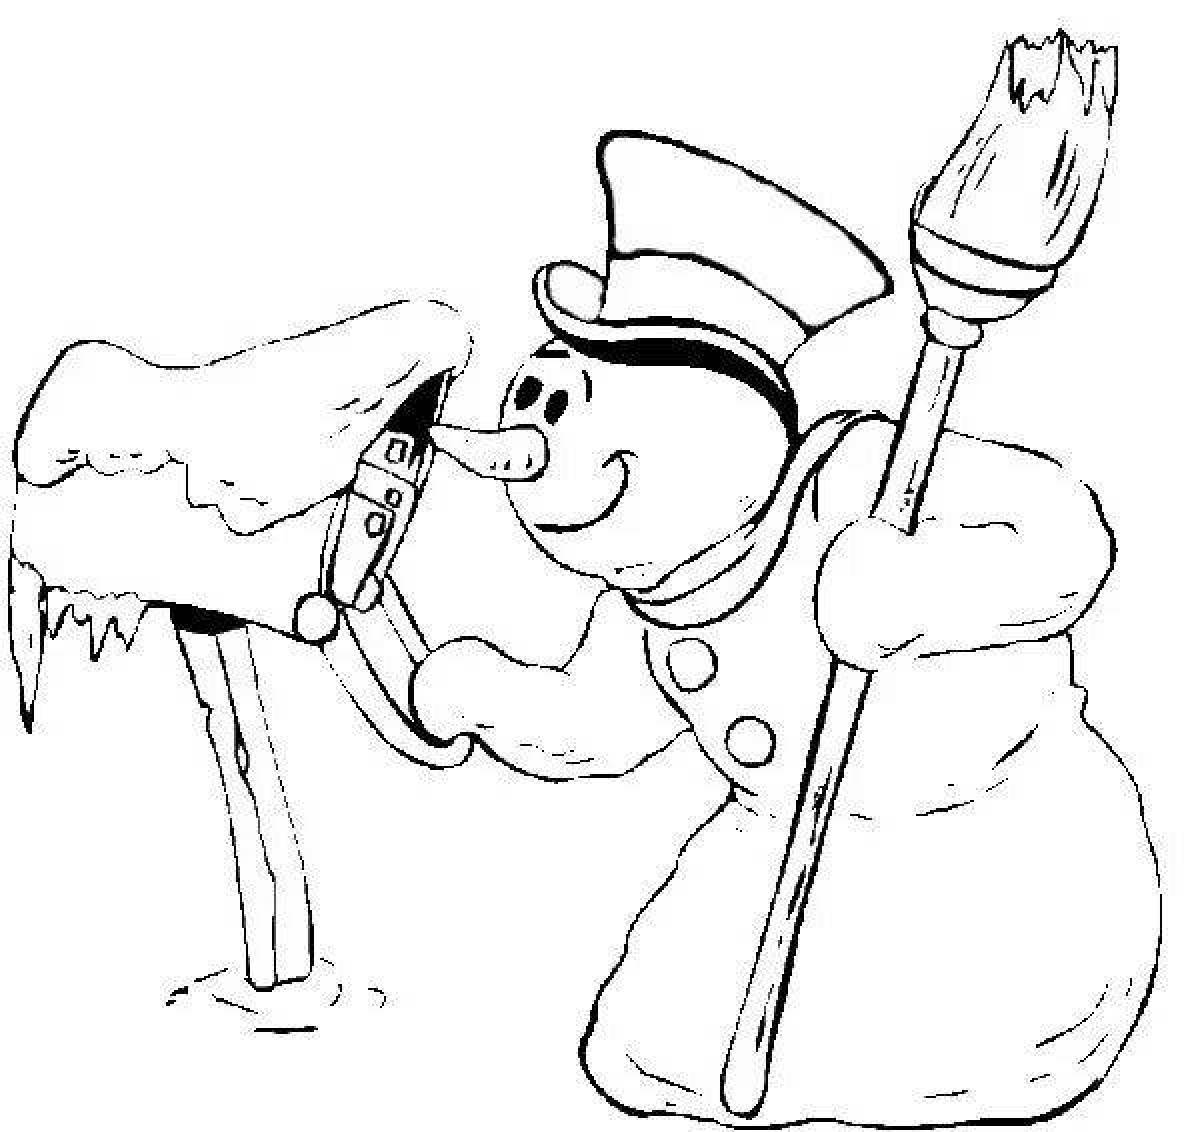 Postman snowman coloring page